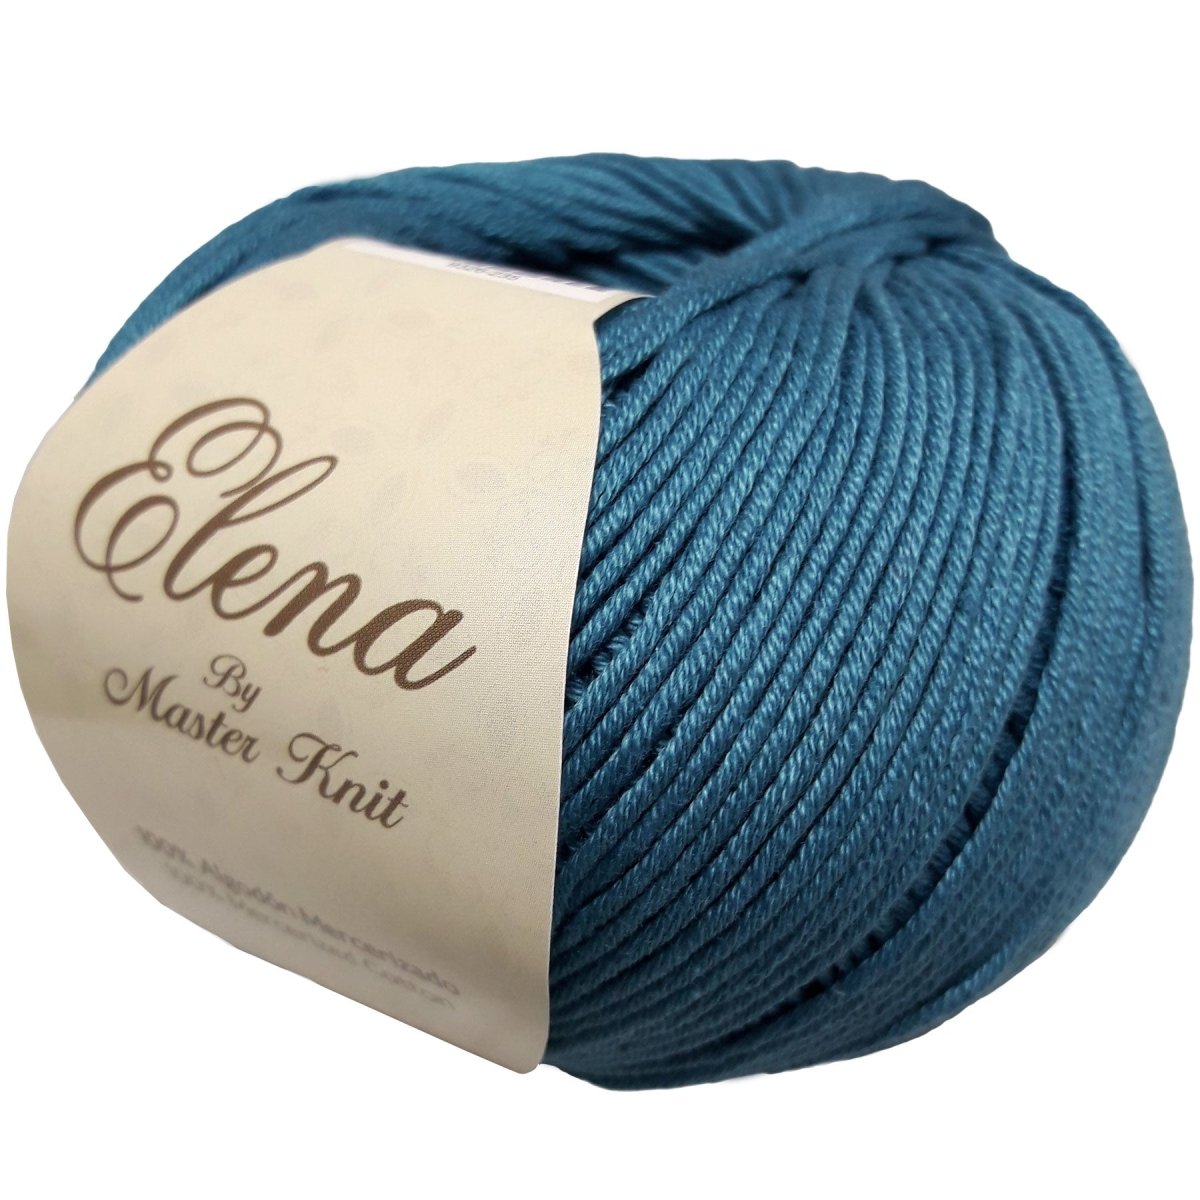 ELENA - Crochetstores9326-235745051438845